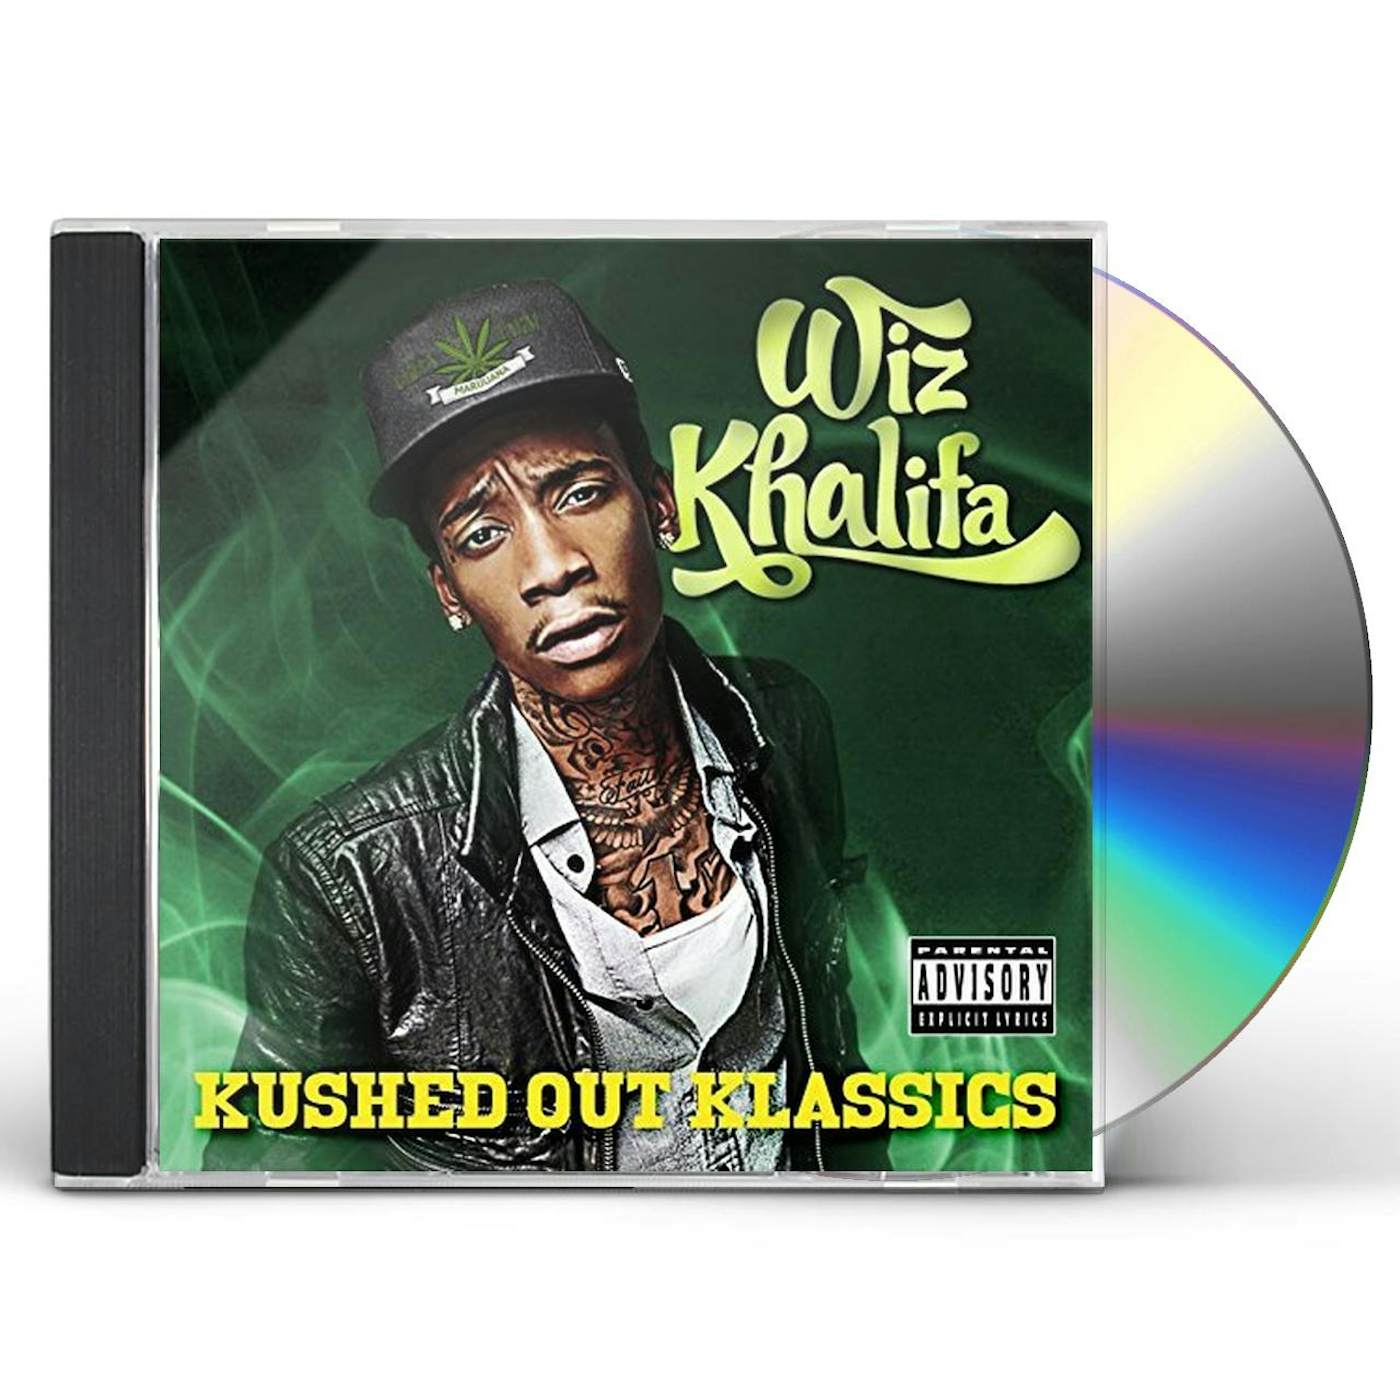 Wiz Khalifa KUSHED OUT KLASSICS CD